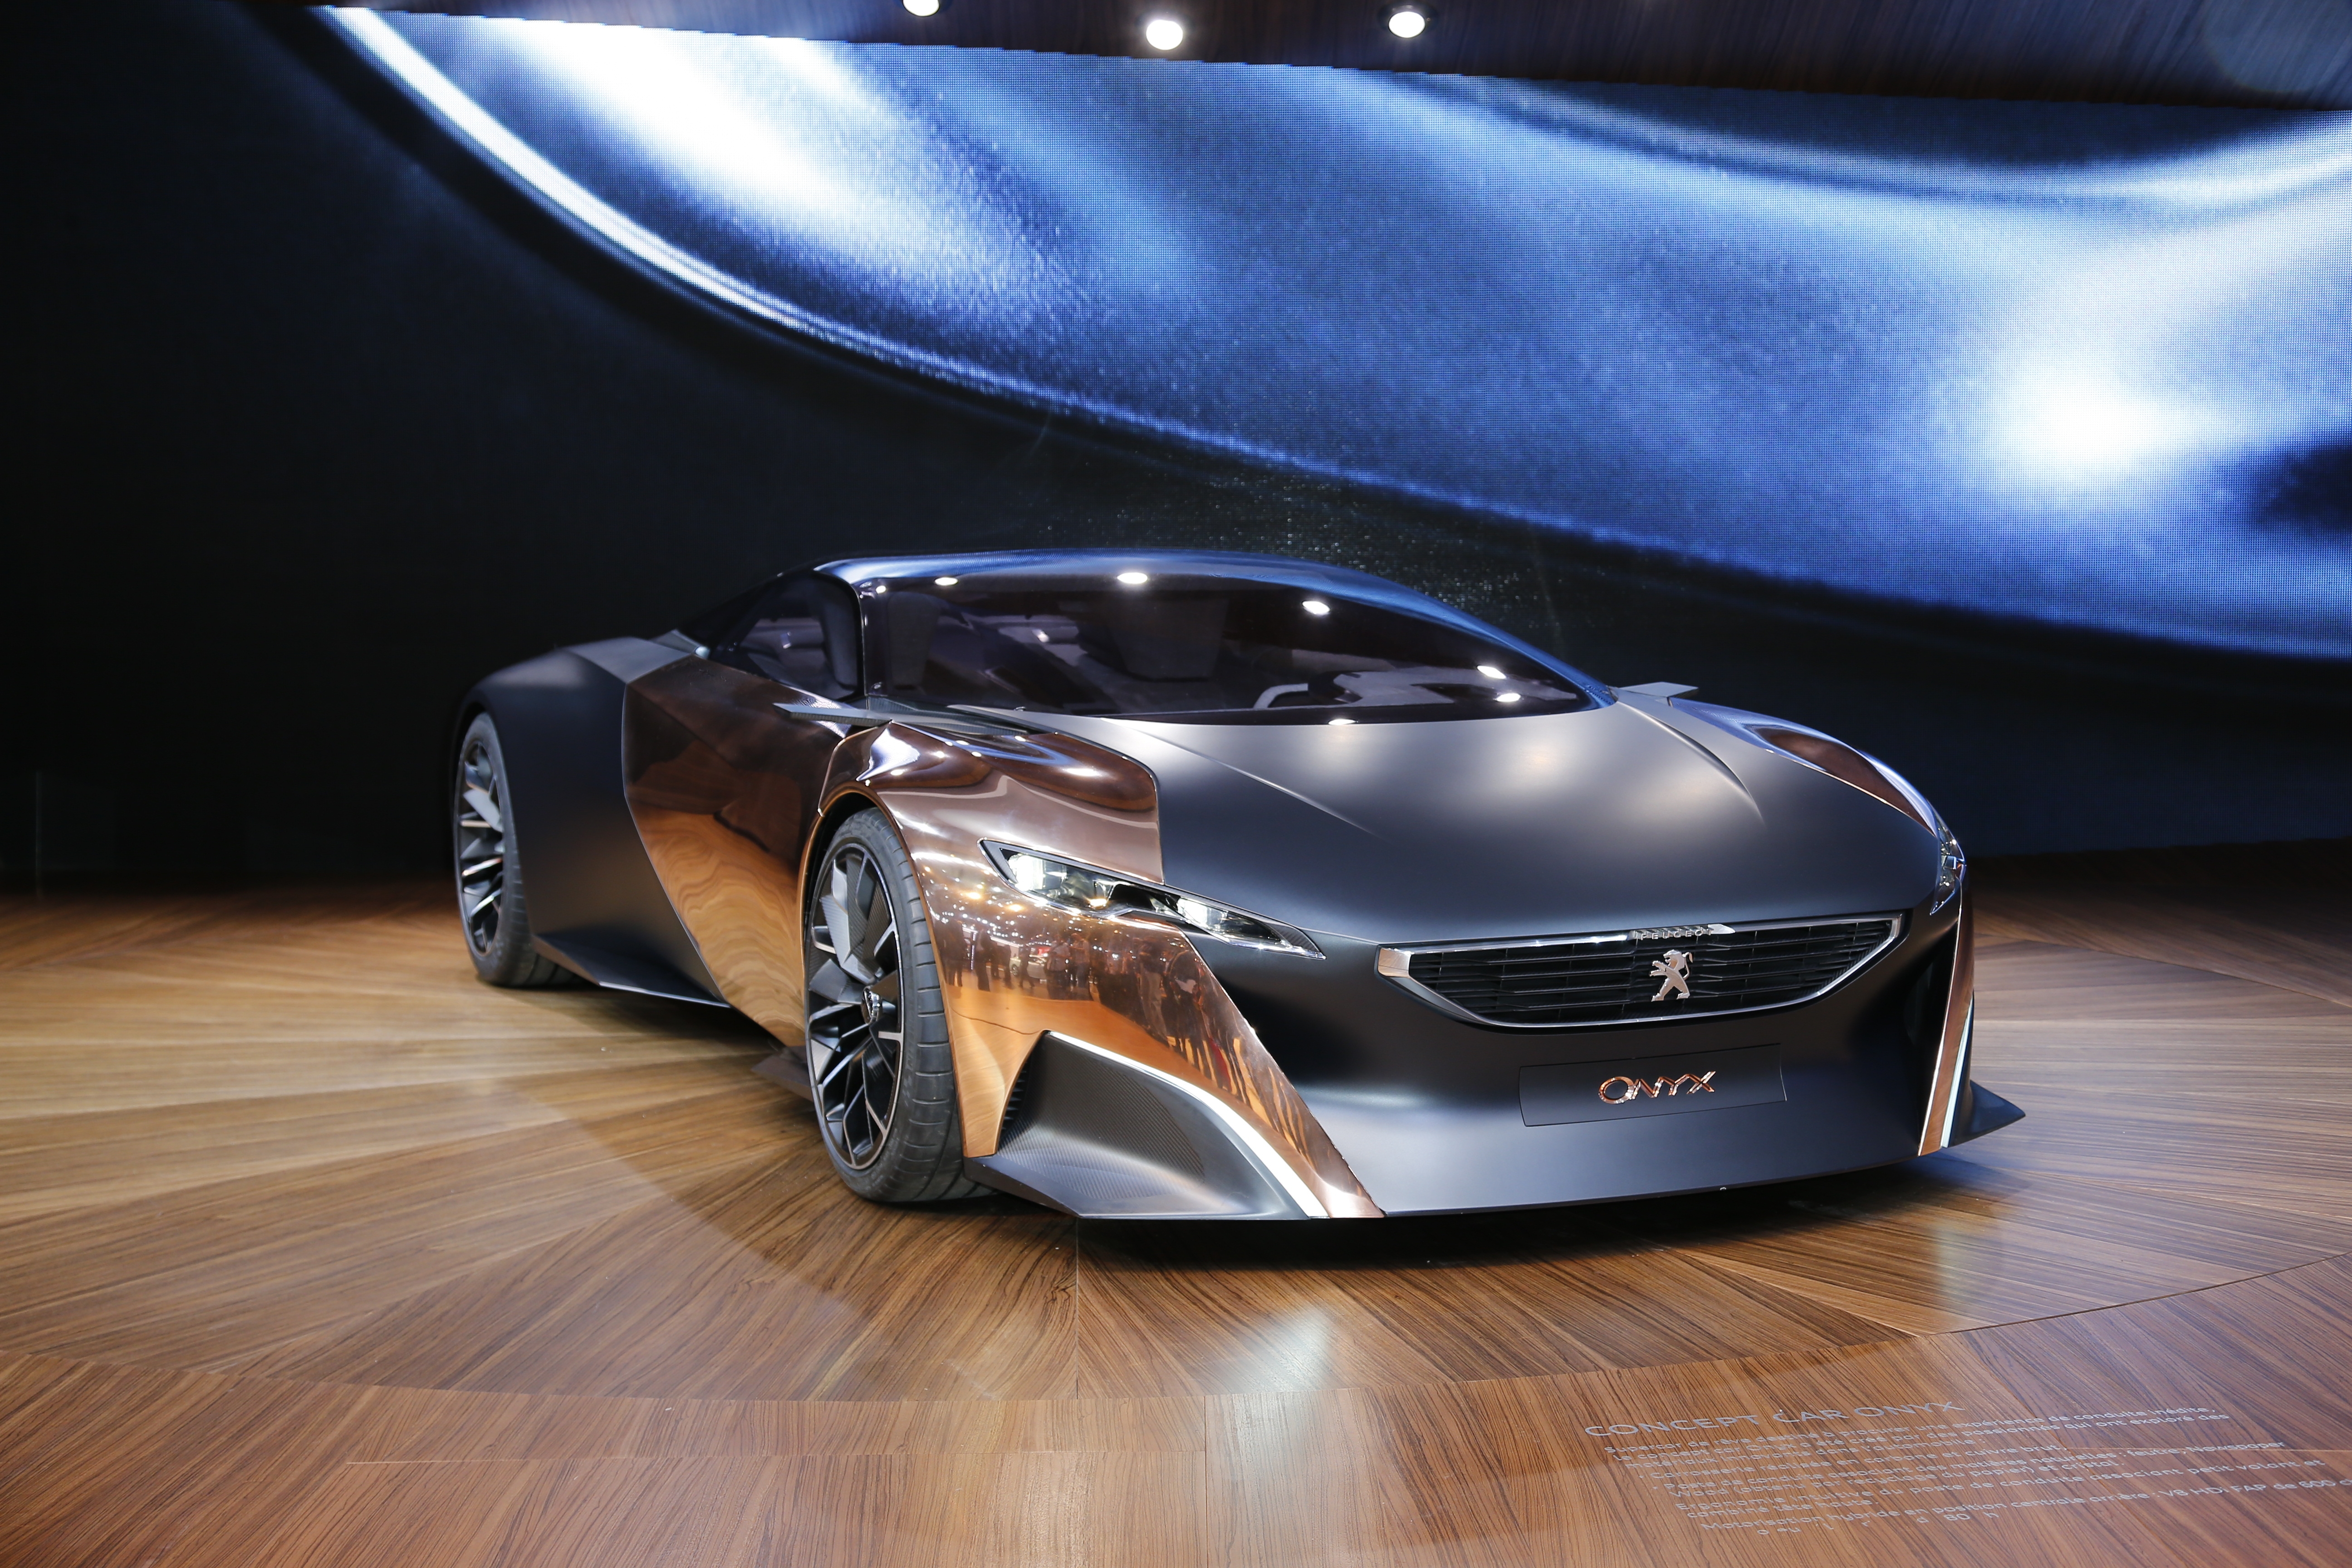 Wallpapers Peugeot Onyx concept design cars on the desktop